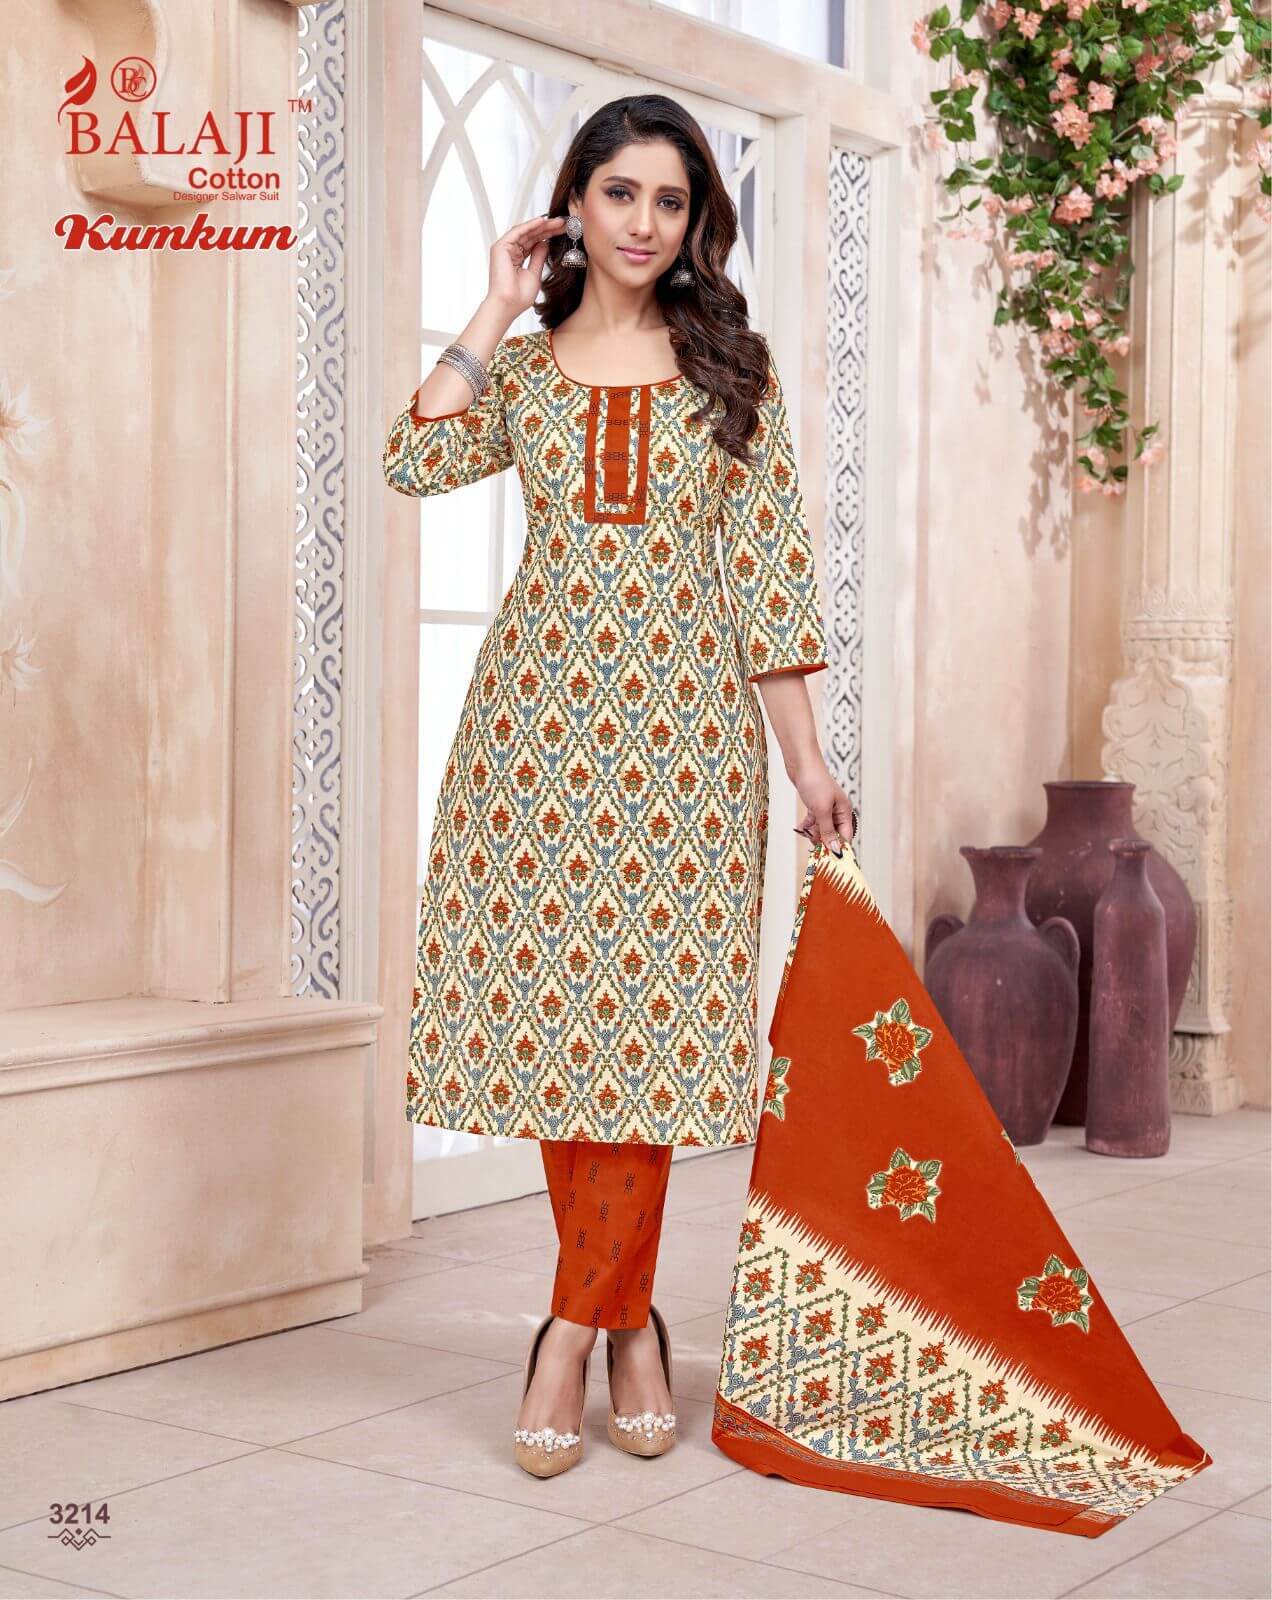 Balaji Cotton Kumkum Vol 32 B Readymade Dress collection 4